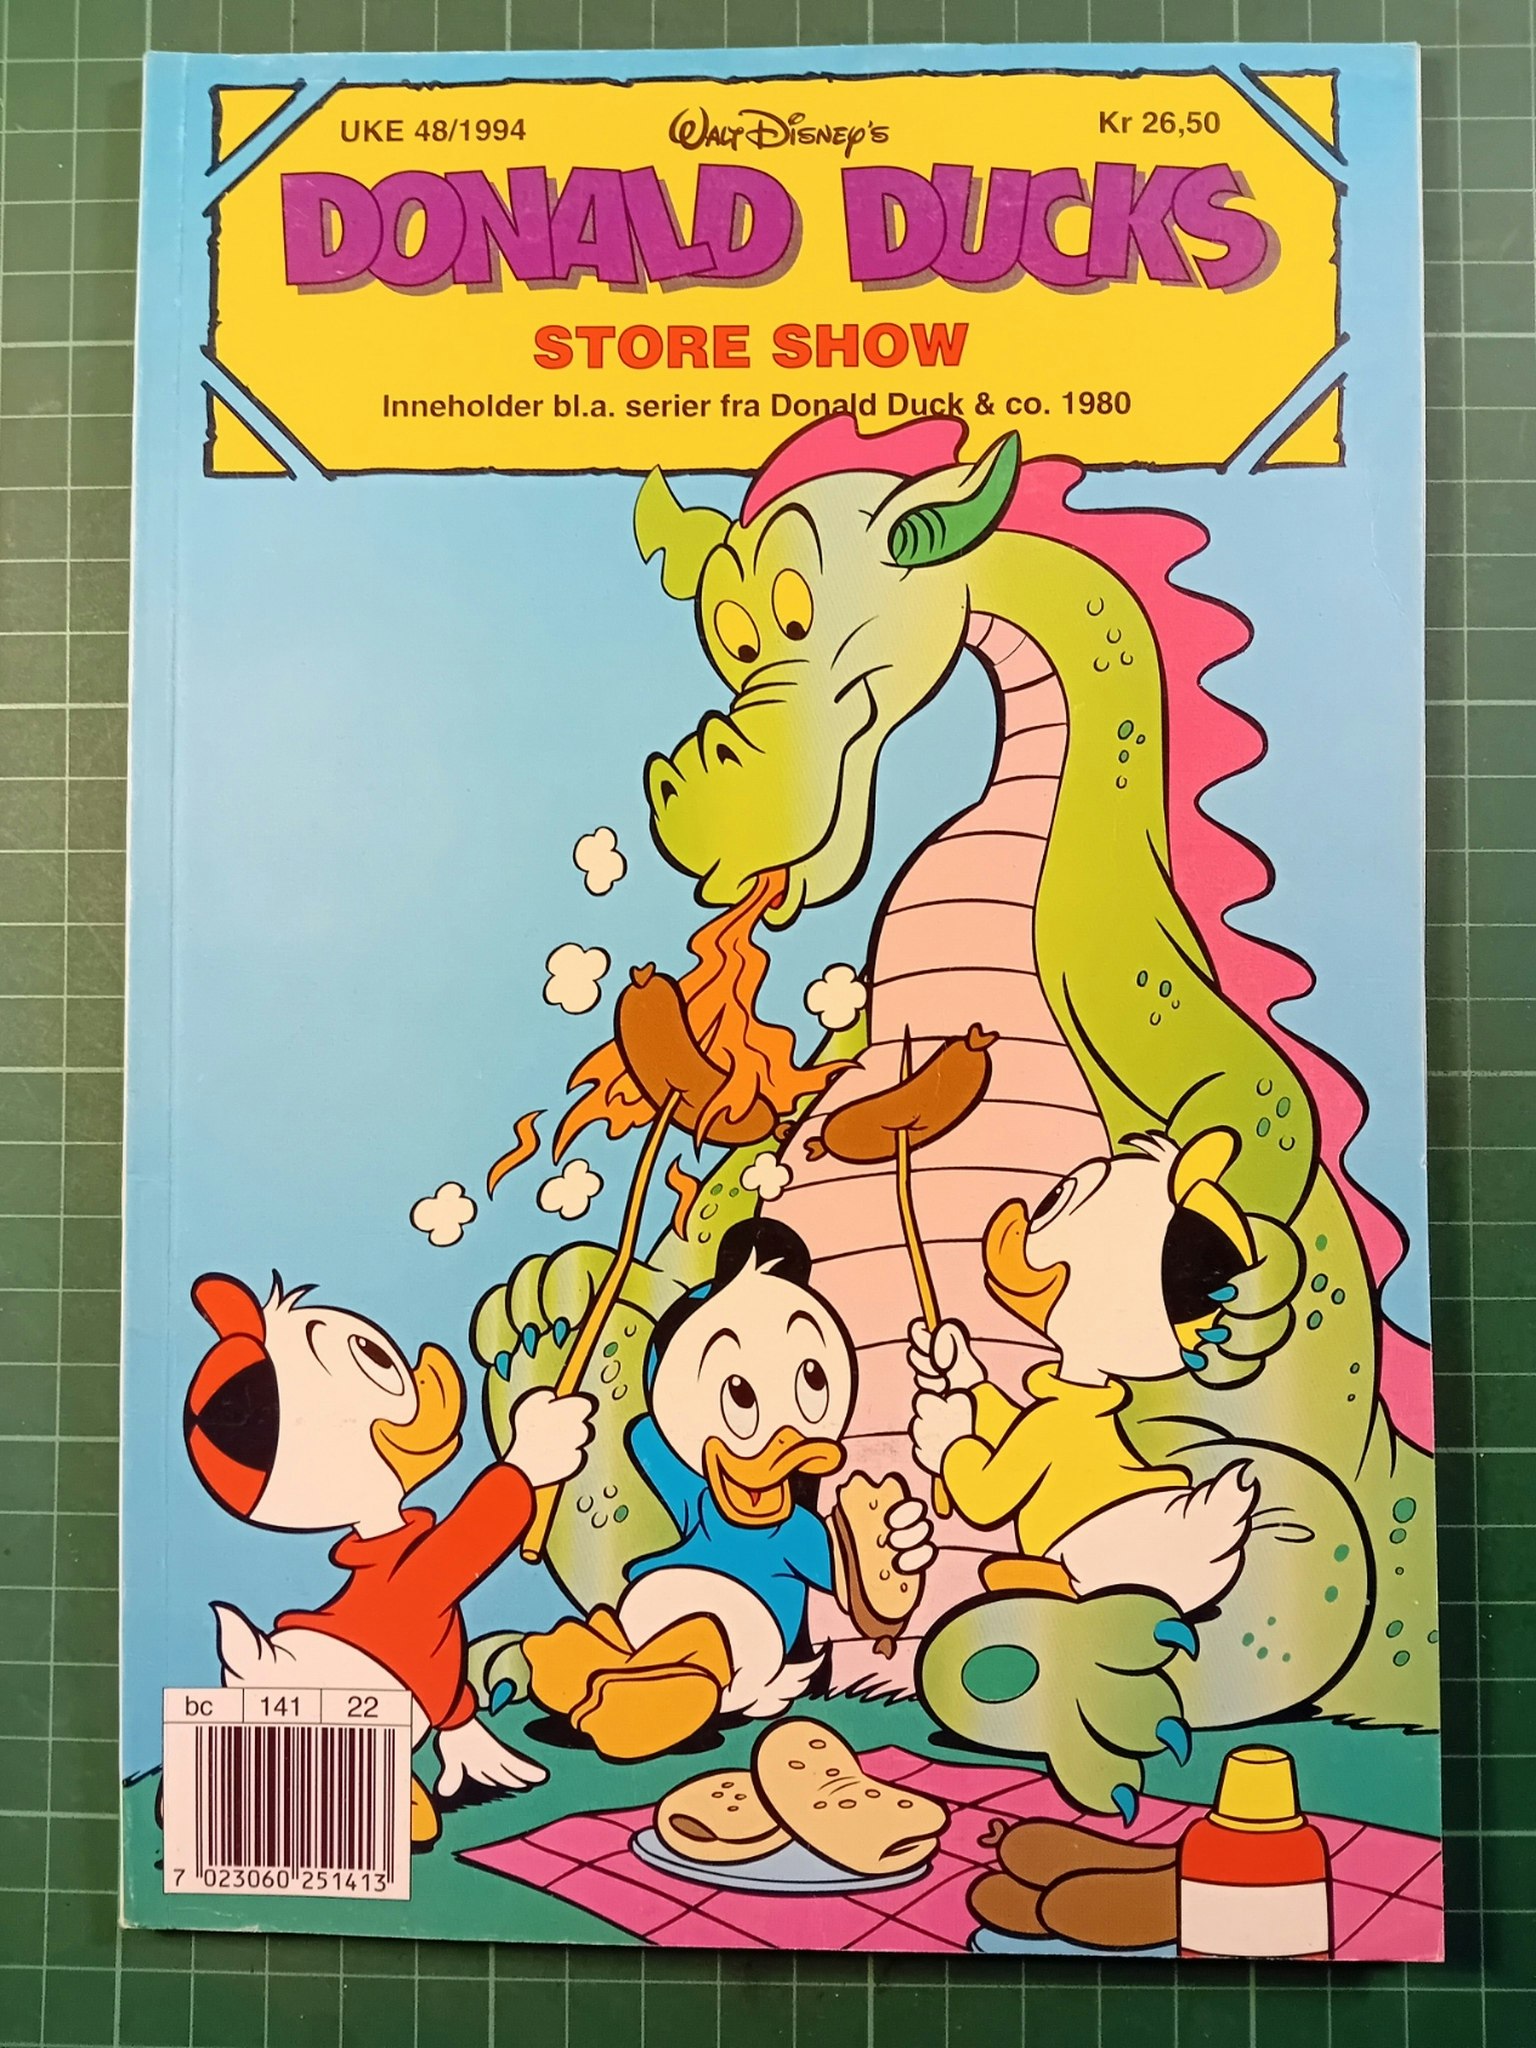 Donald Ducks 1994 Store show